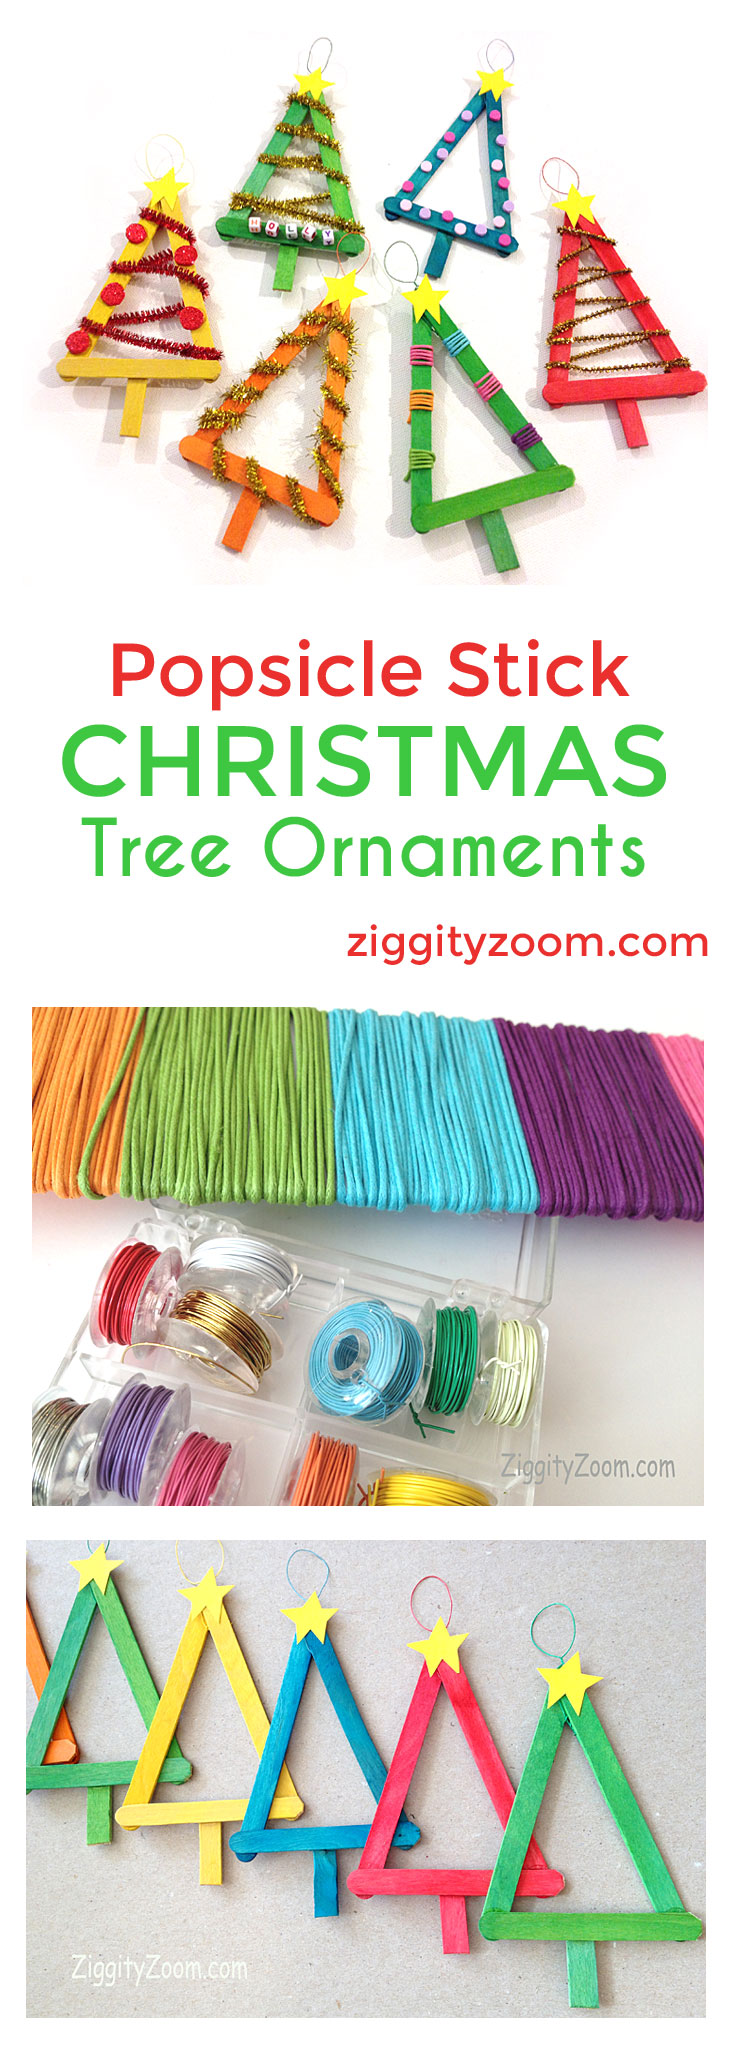 Popsicle stick ornaments